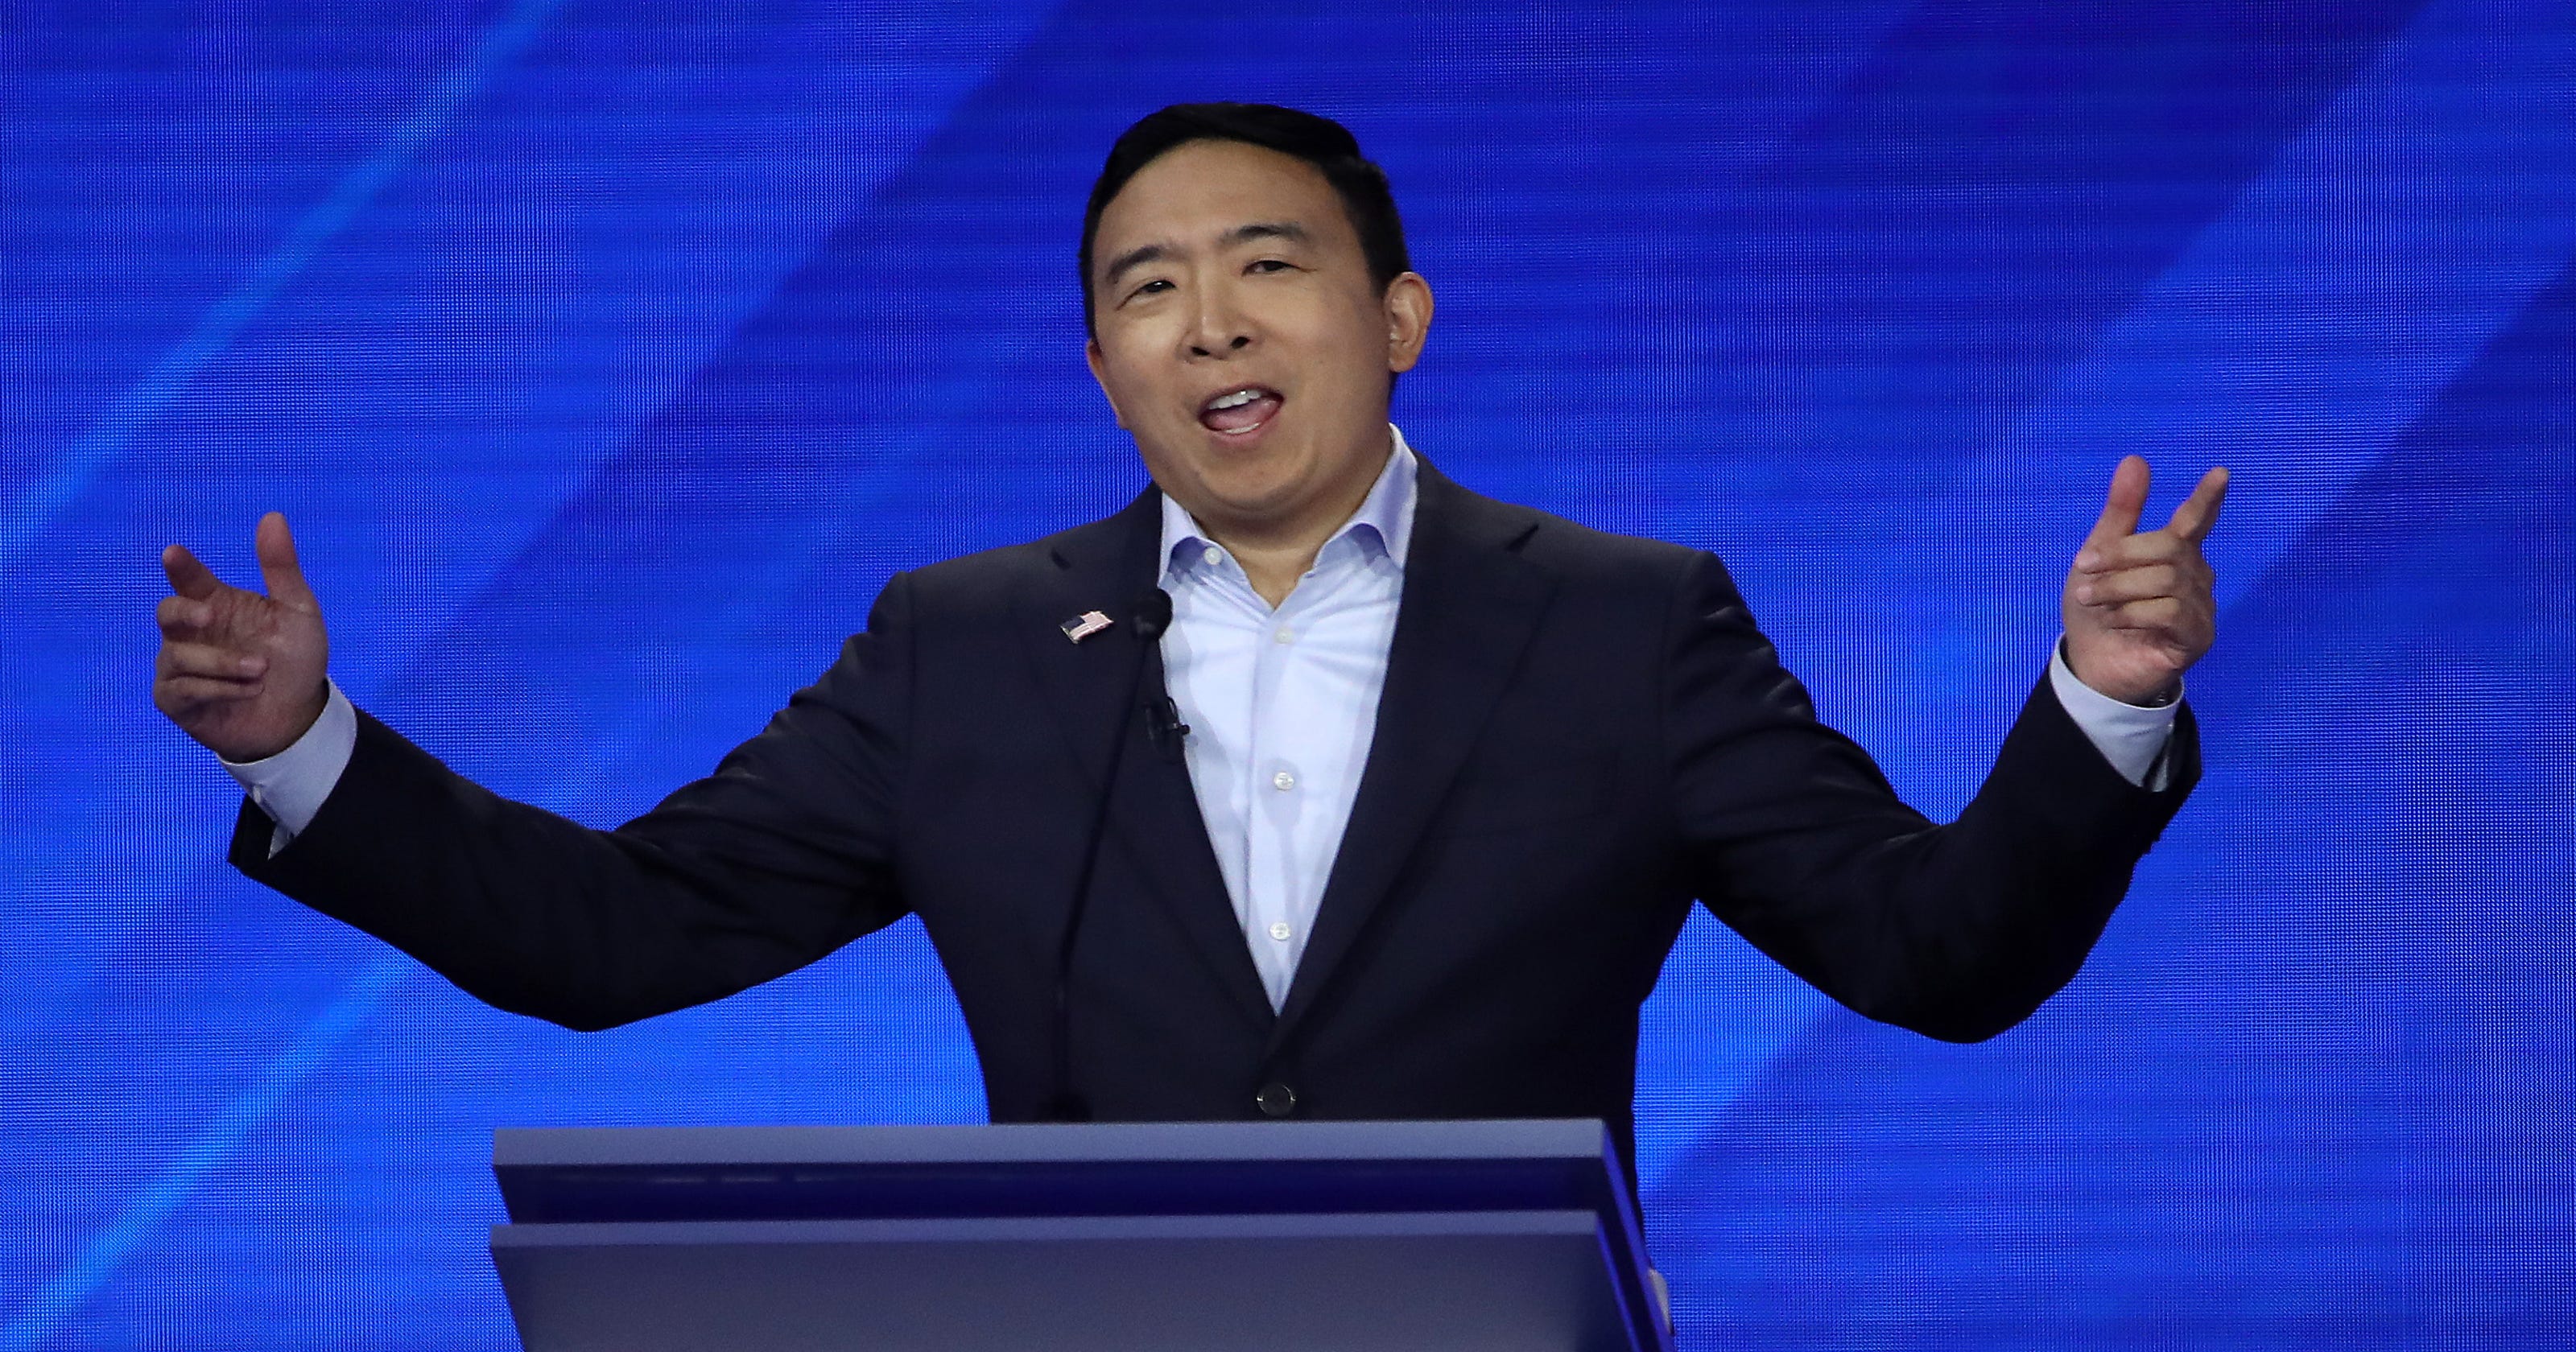 Democratic debate: Andrew Yang says $1,000/month for more families2986 x 1680